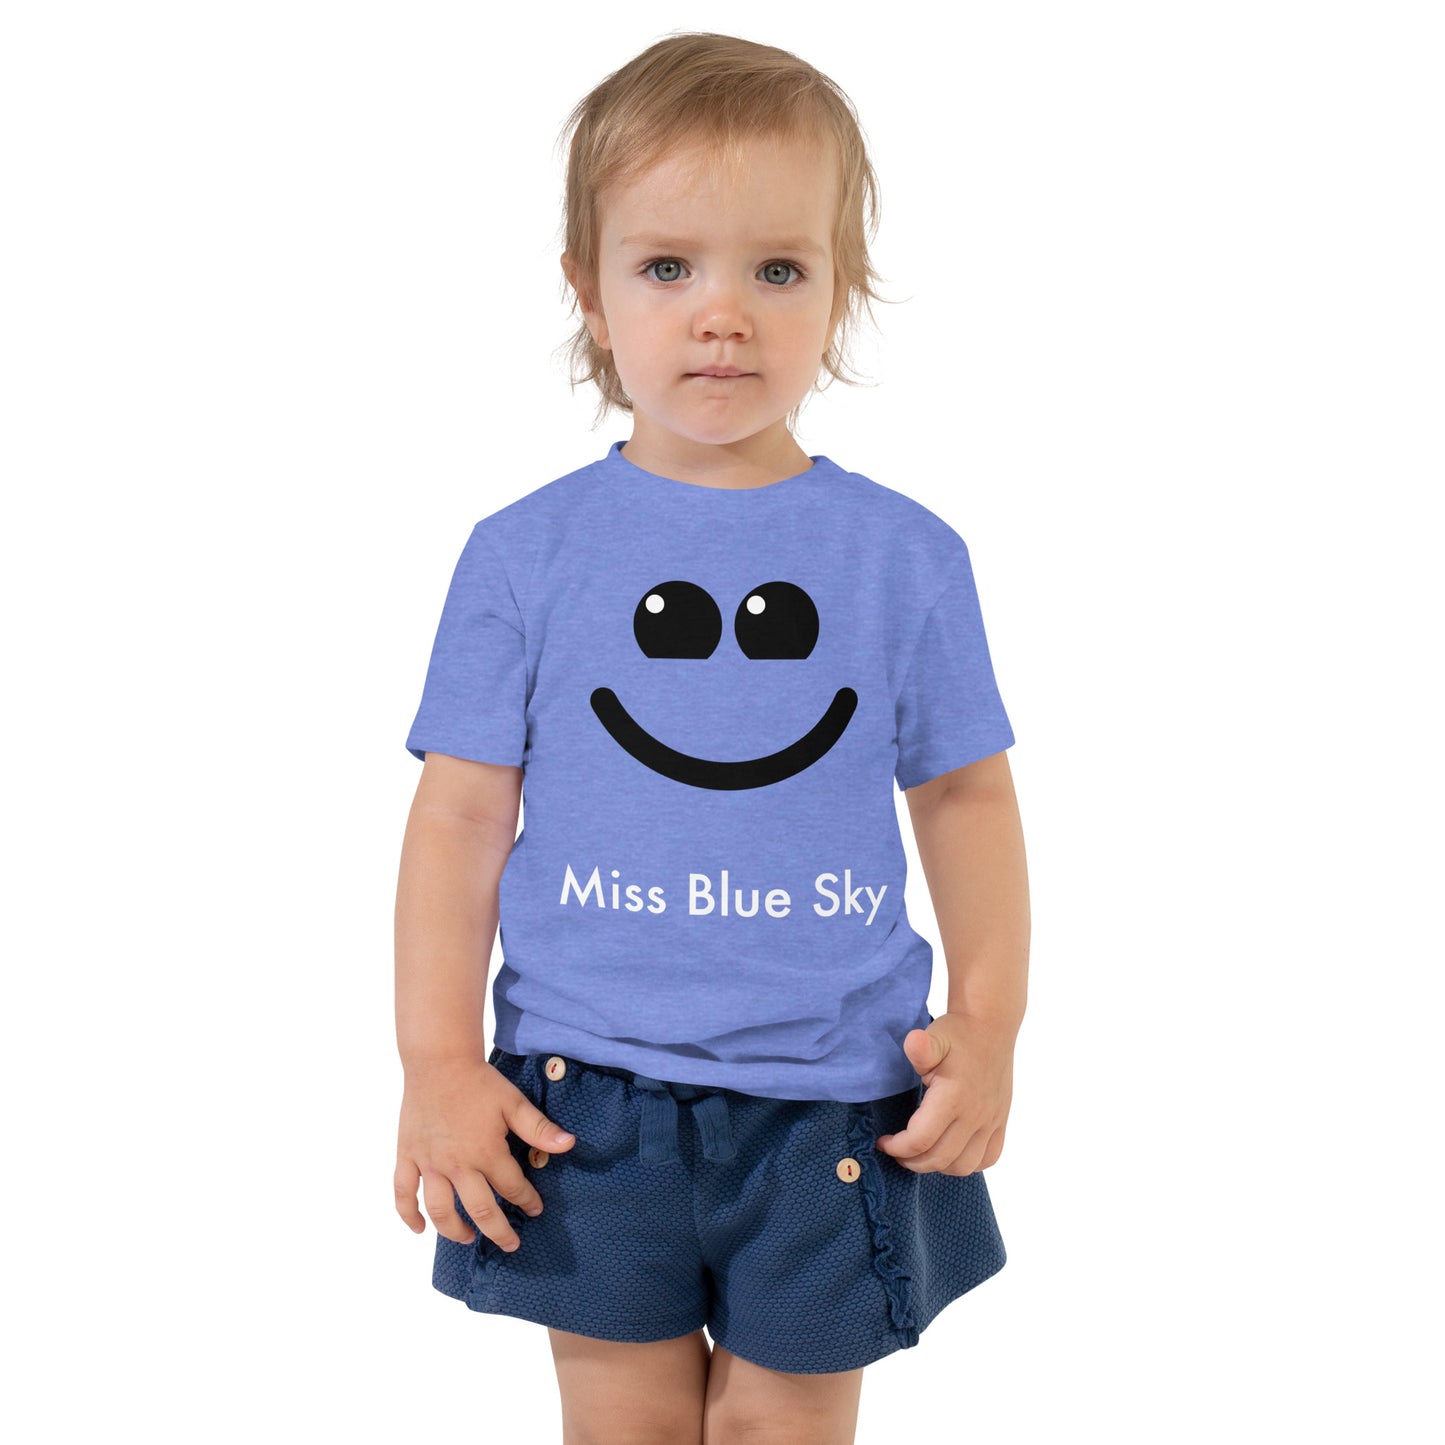 Toddler - Miss Blue Sky - Short Sleeve Tee